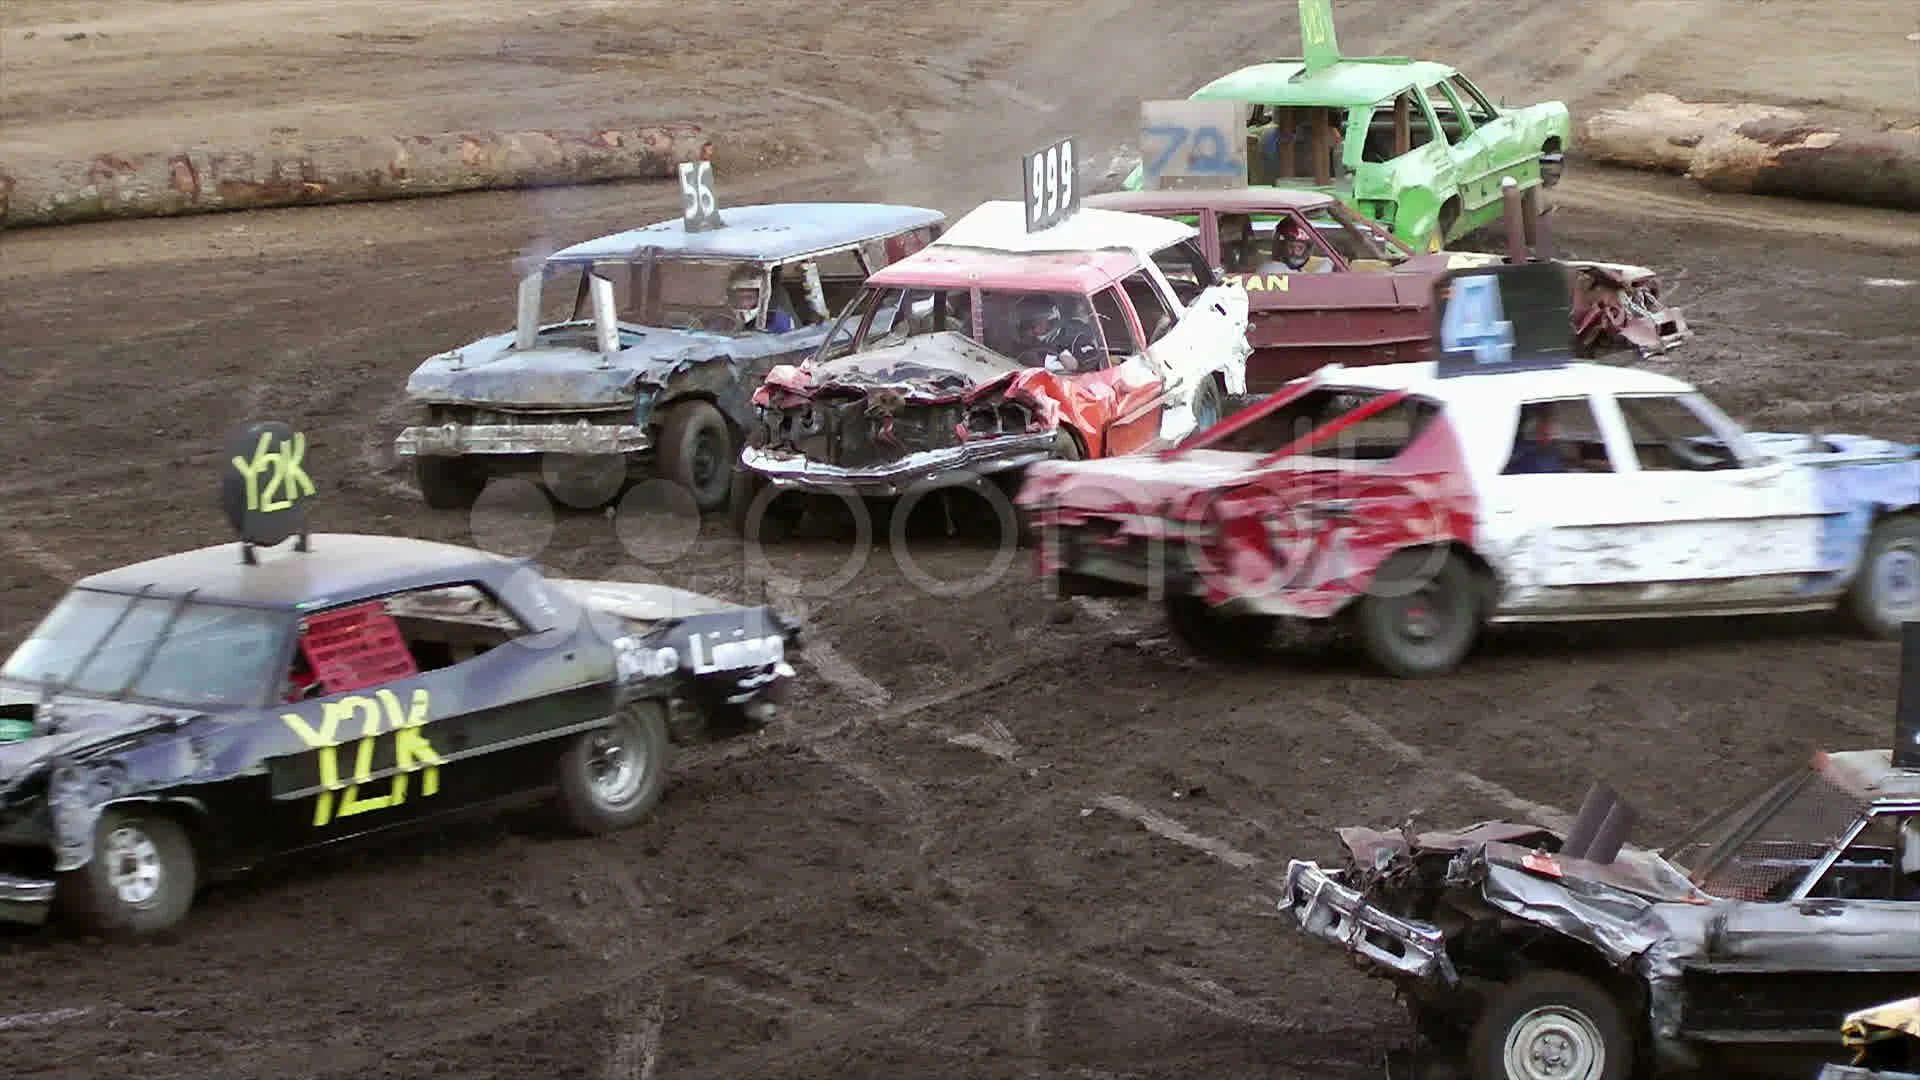 Crash Cars - A Physics Smashing Demolition Derby